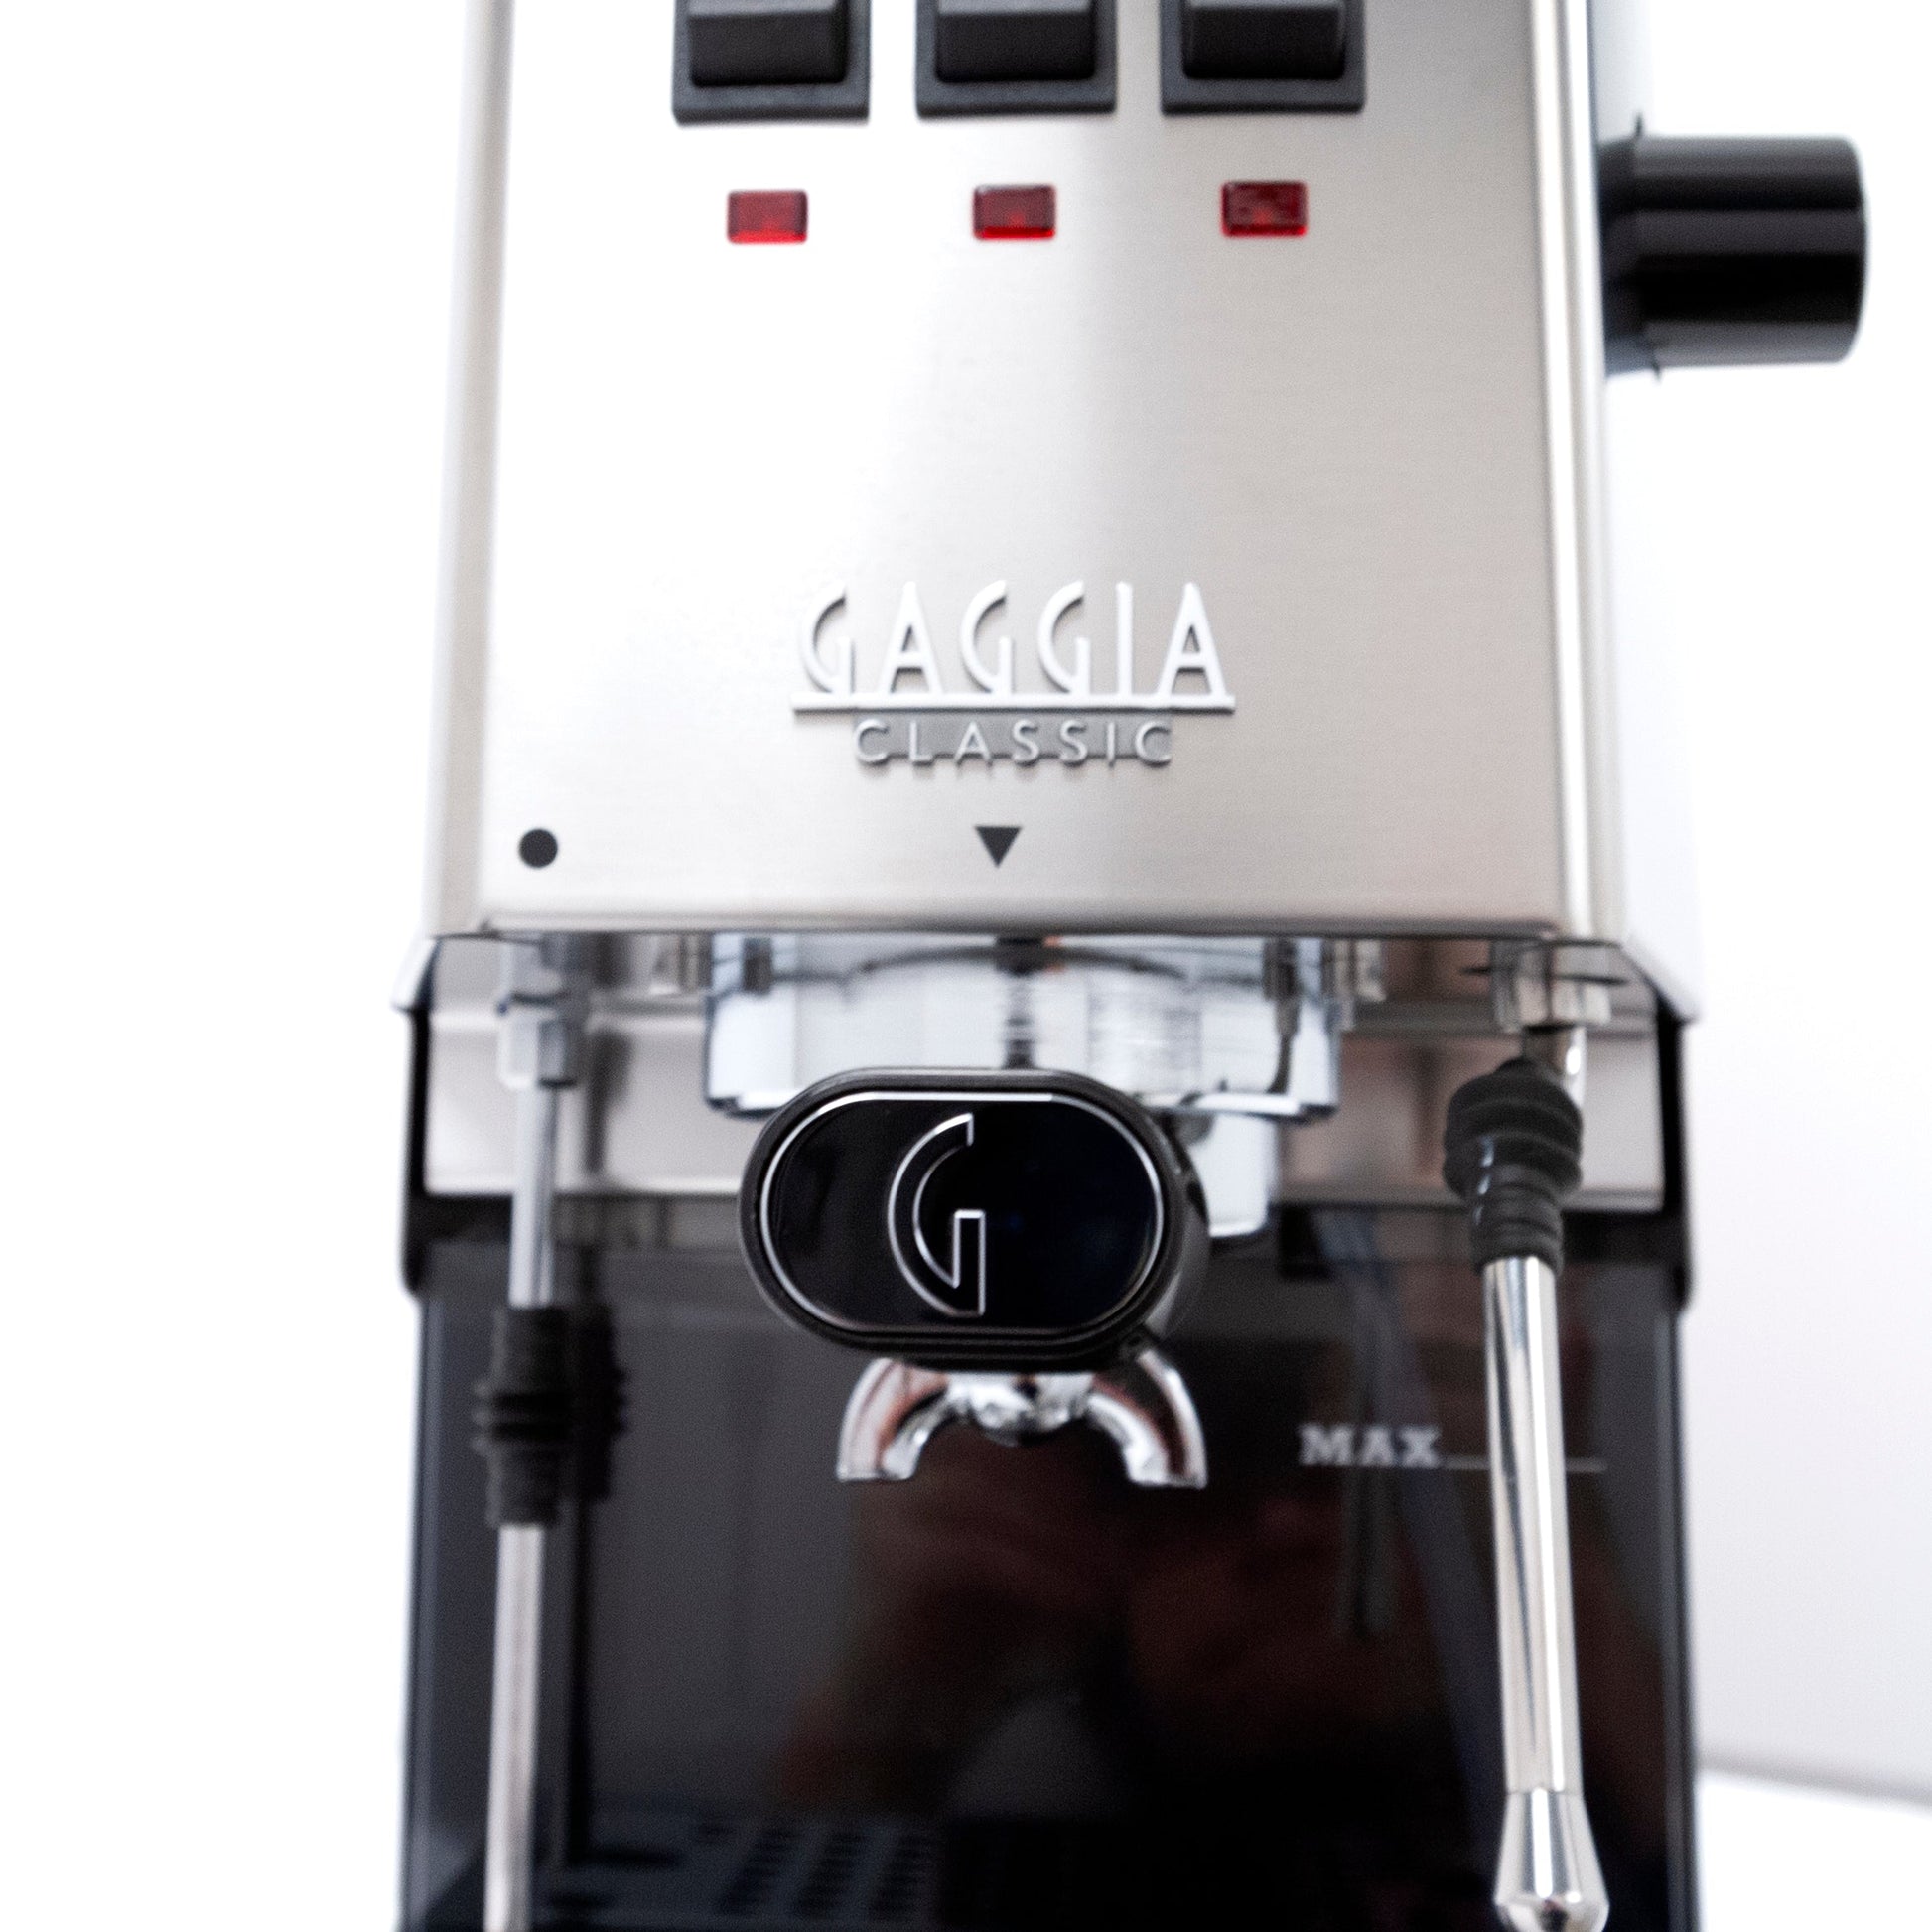 Macchina per Caffé Gaggia Espresso Evolution Silver